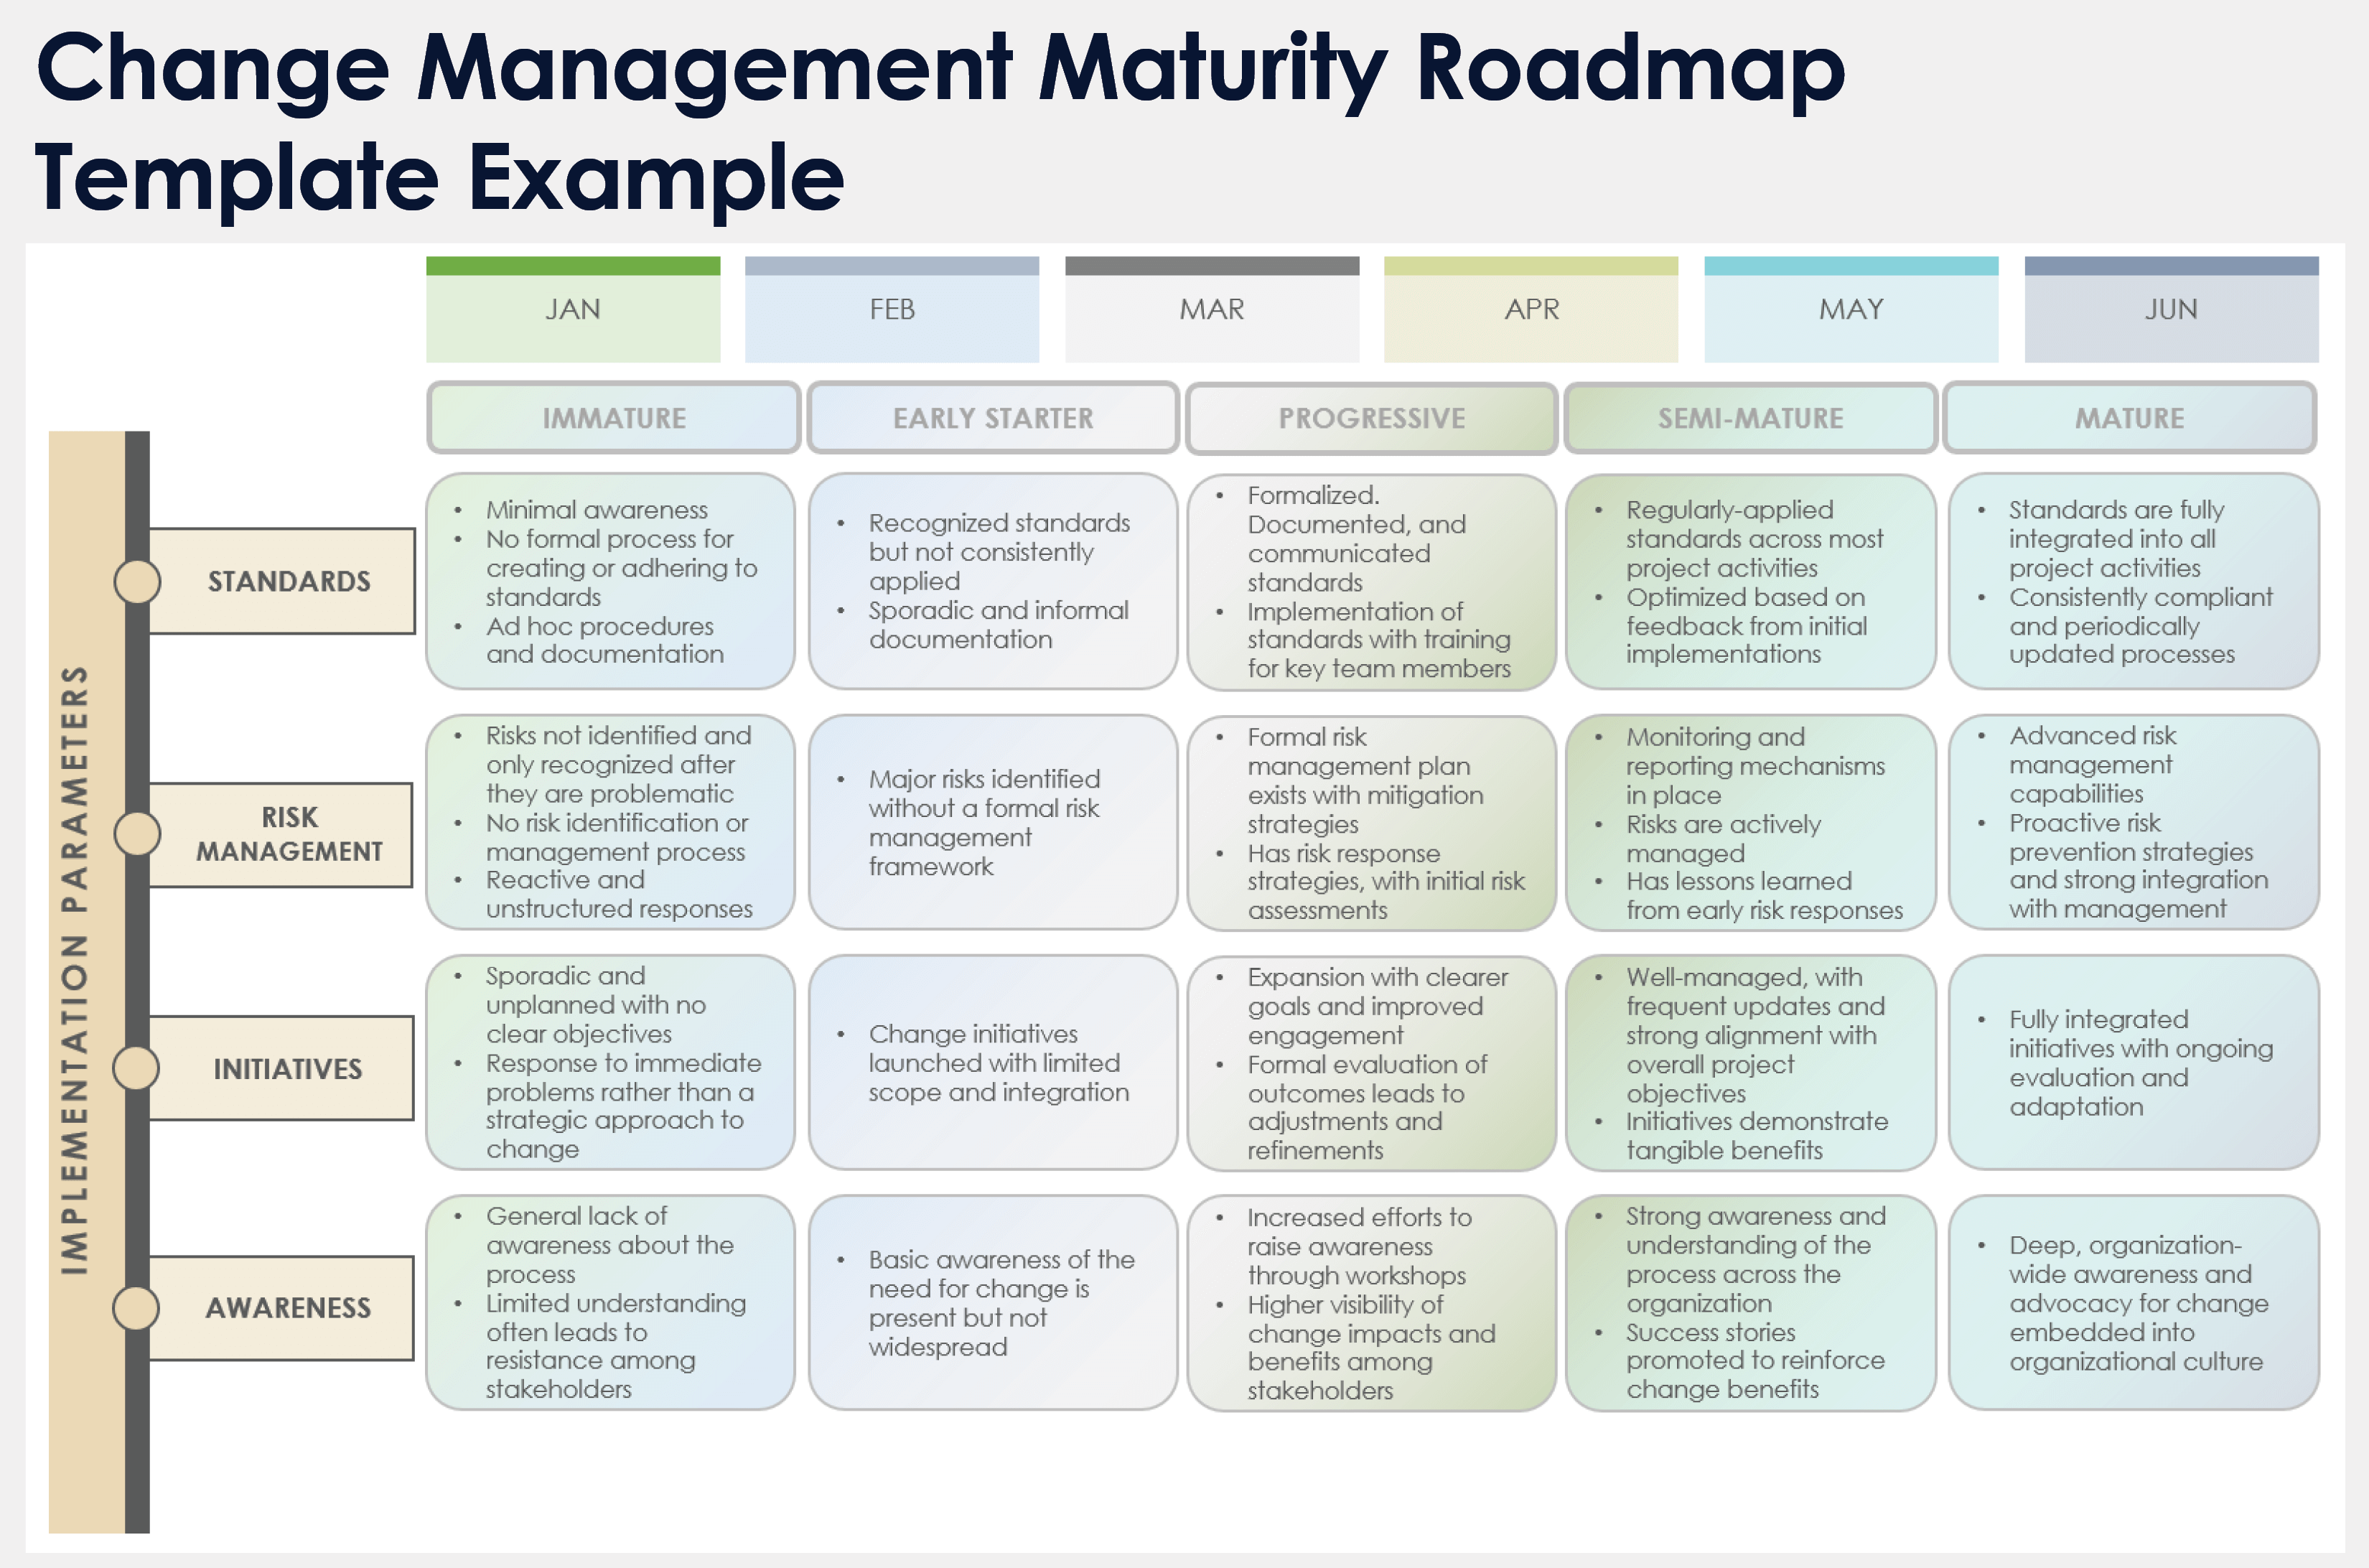 Change Management Maturity Roadmap Template Example